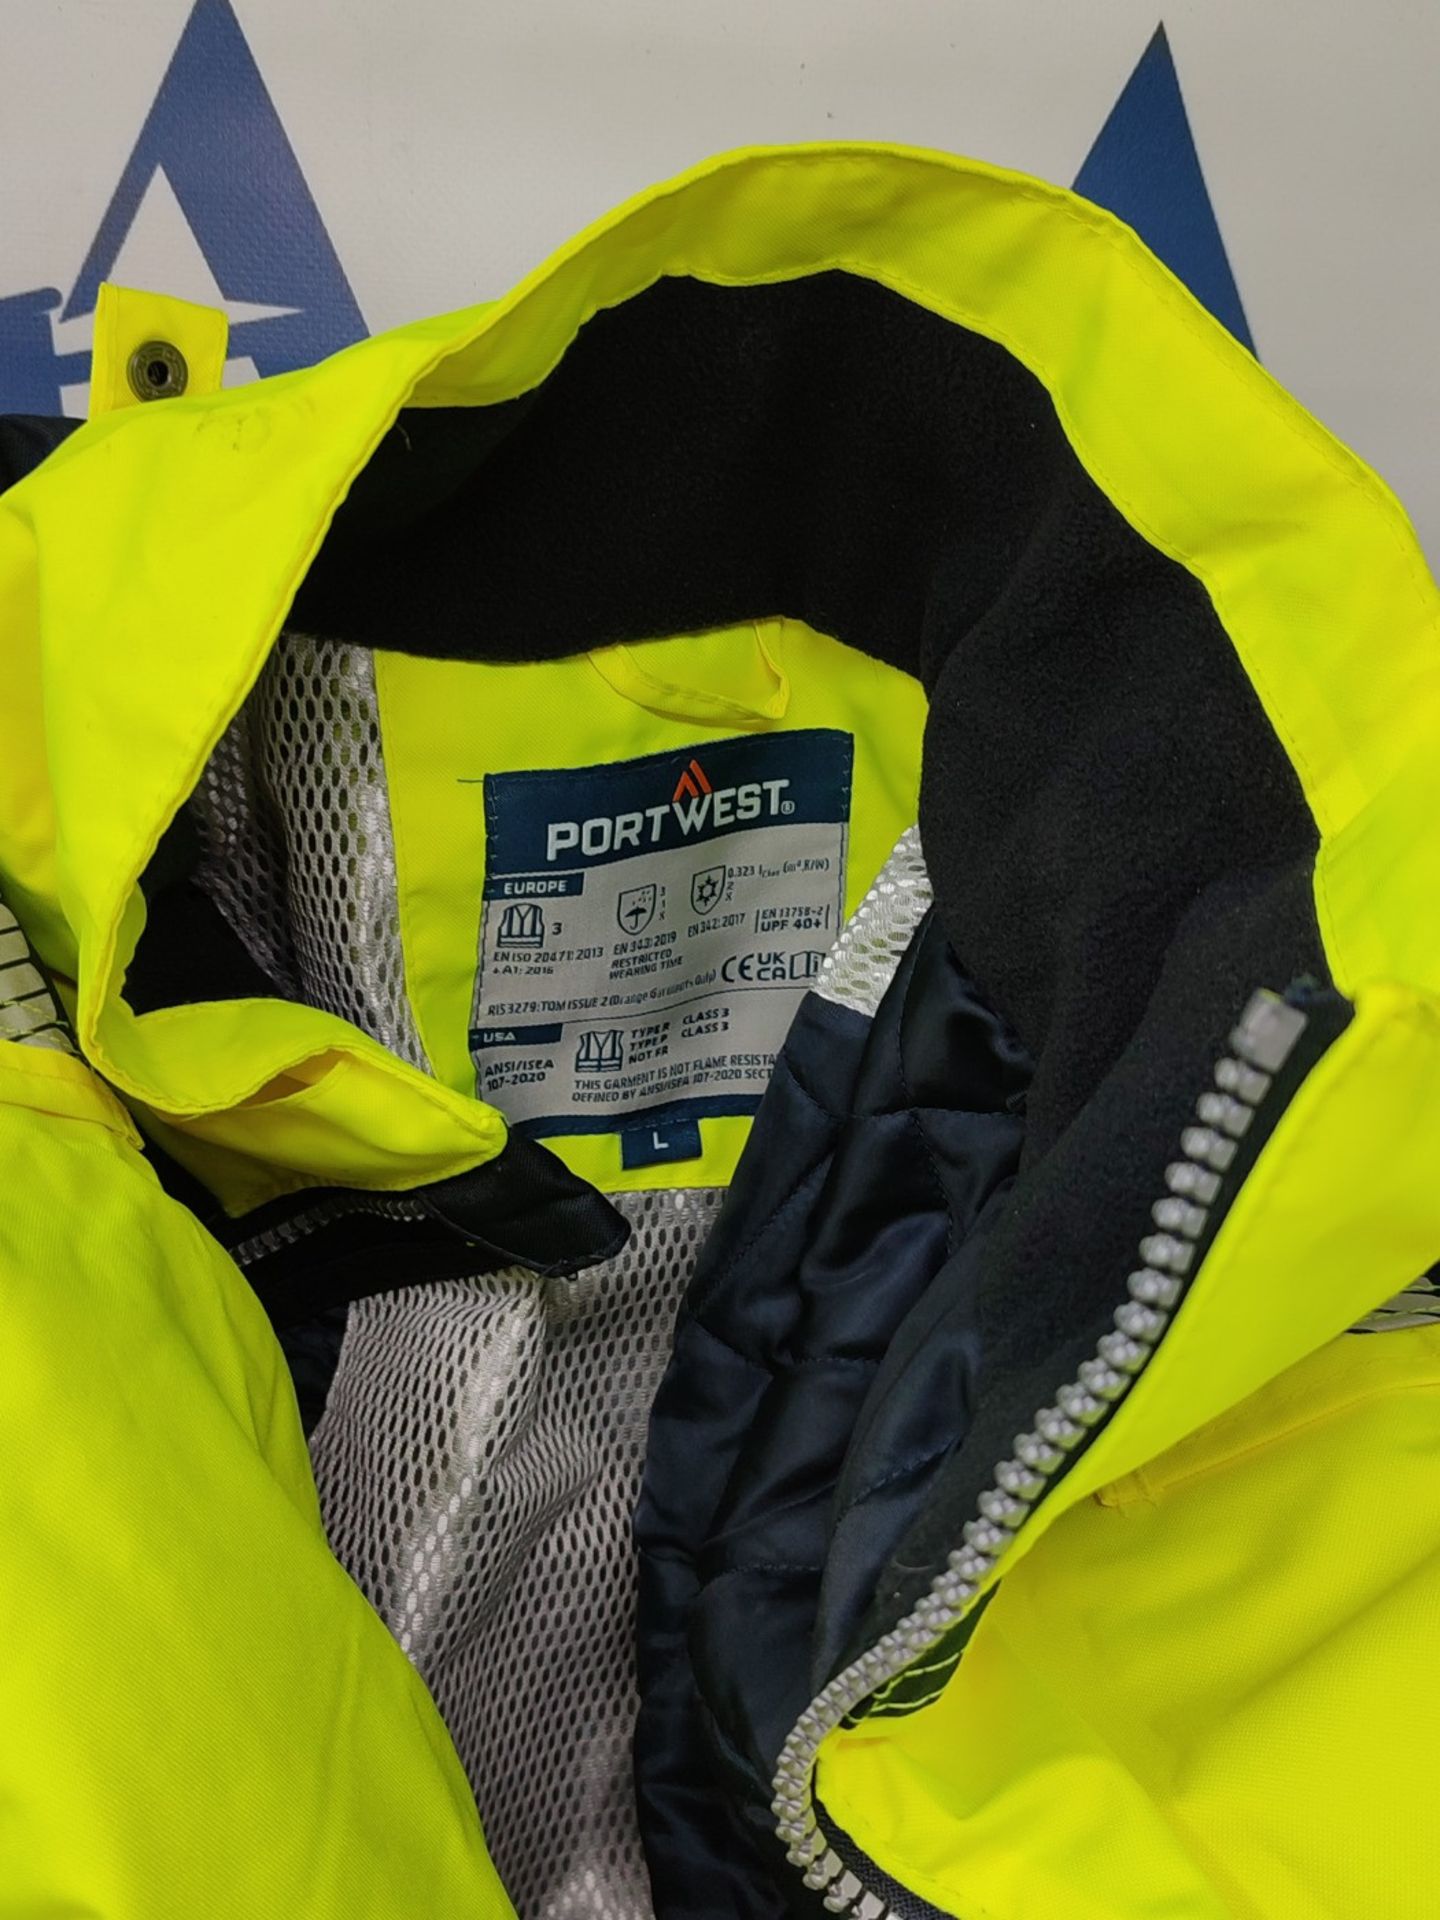 RRP £71.00 Portwest T400 Men's Reflective Waterproof PW3 Hi-Vis Winter Jacket Yellow/Navy, Large - Image 3 of 3